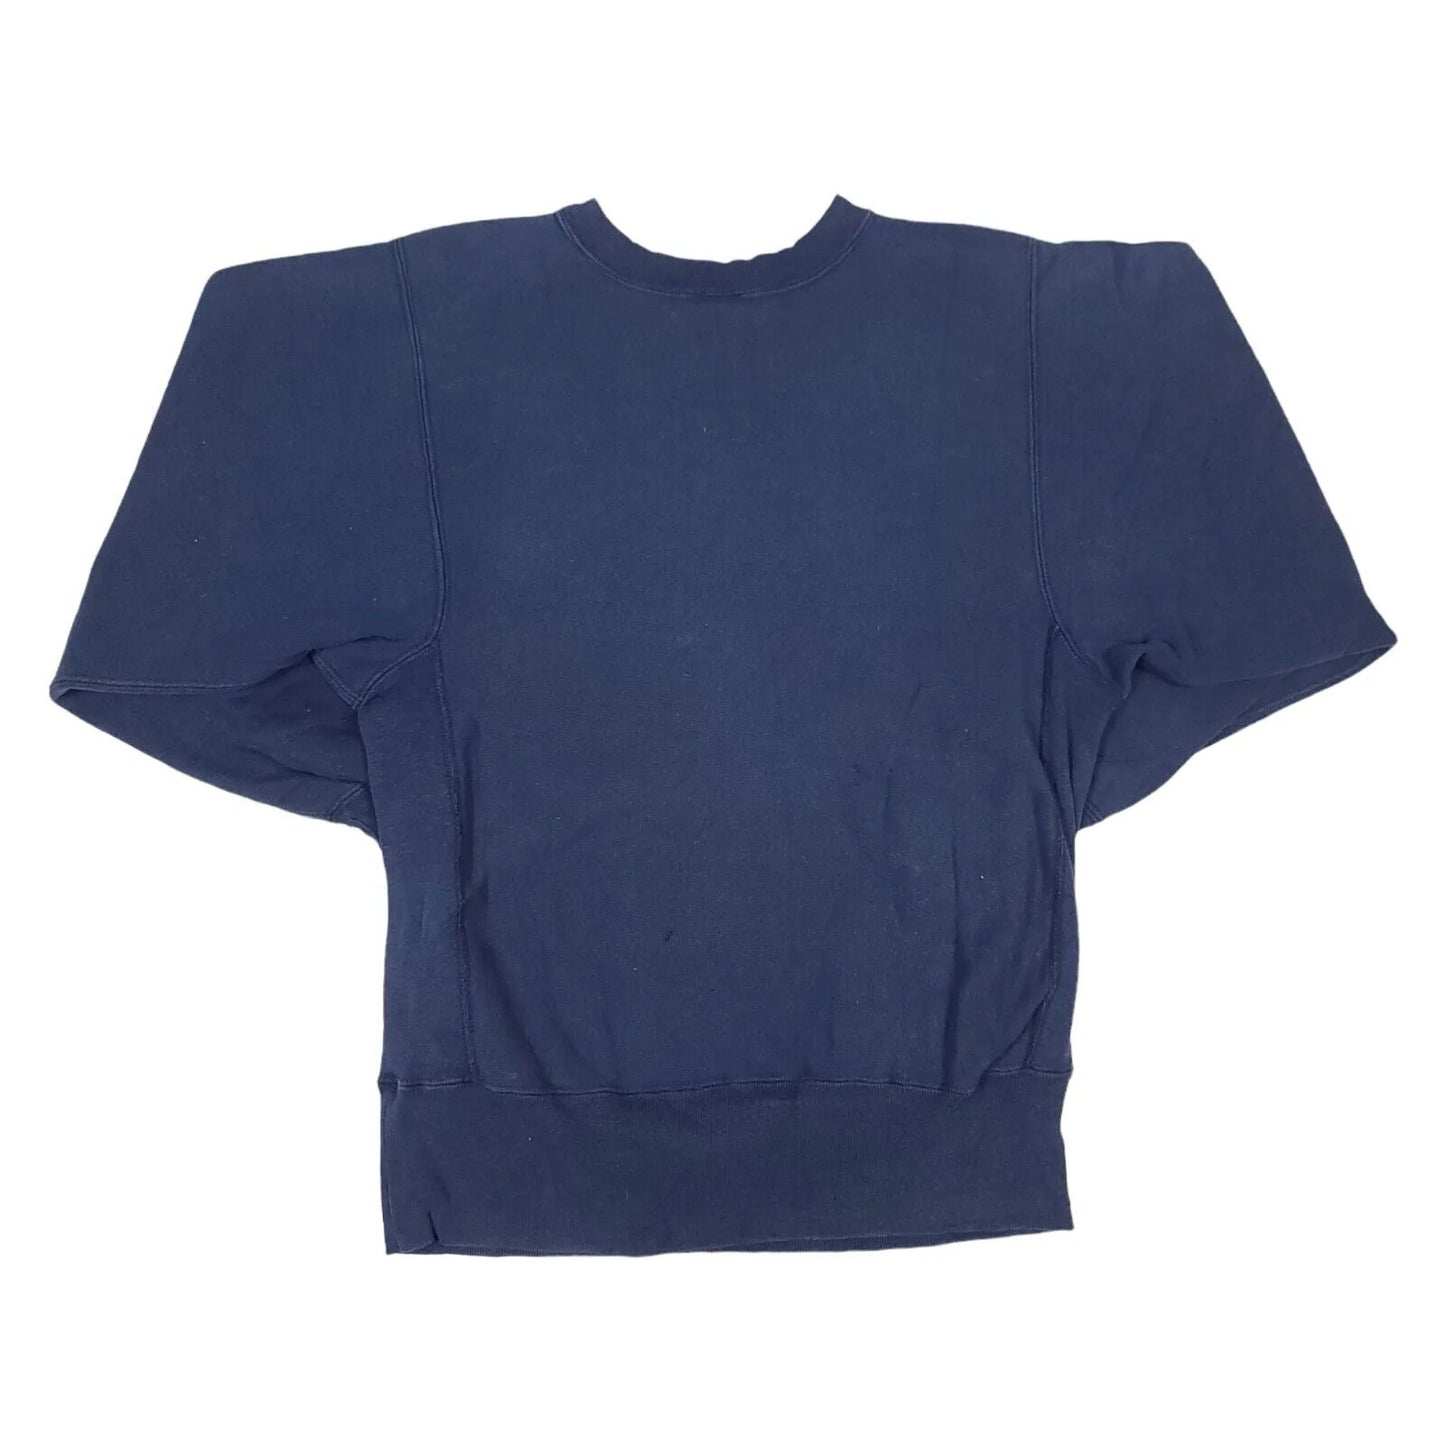 Vintage Stony Brook University Blue Champion Reverse Weave Sweatshirt